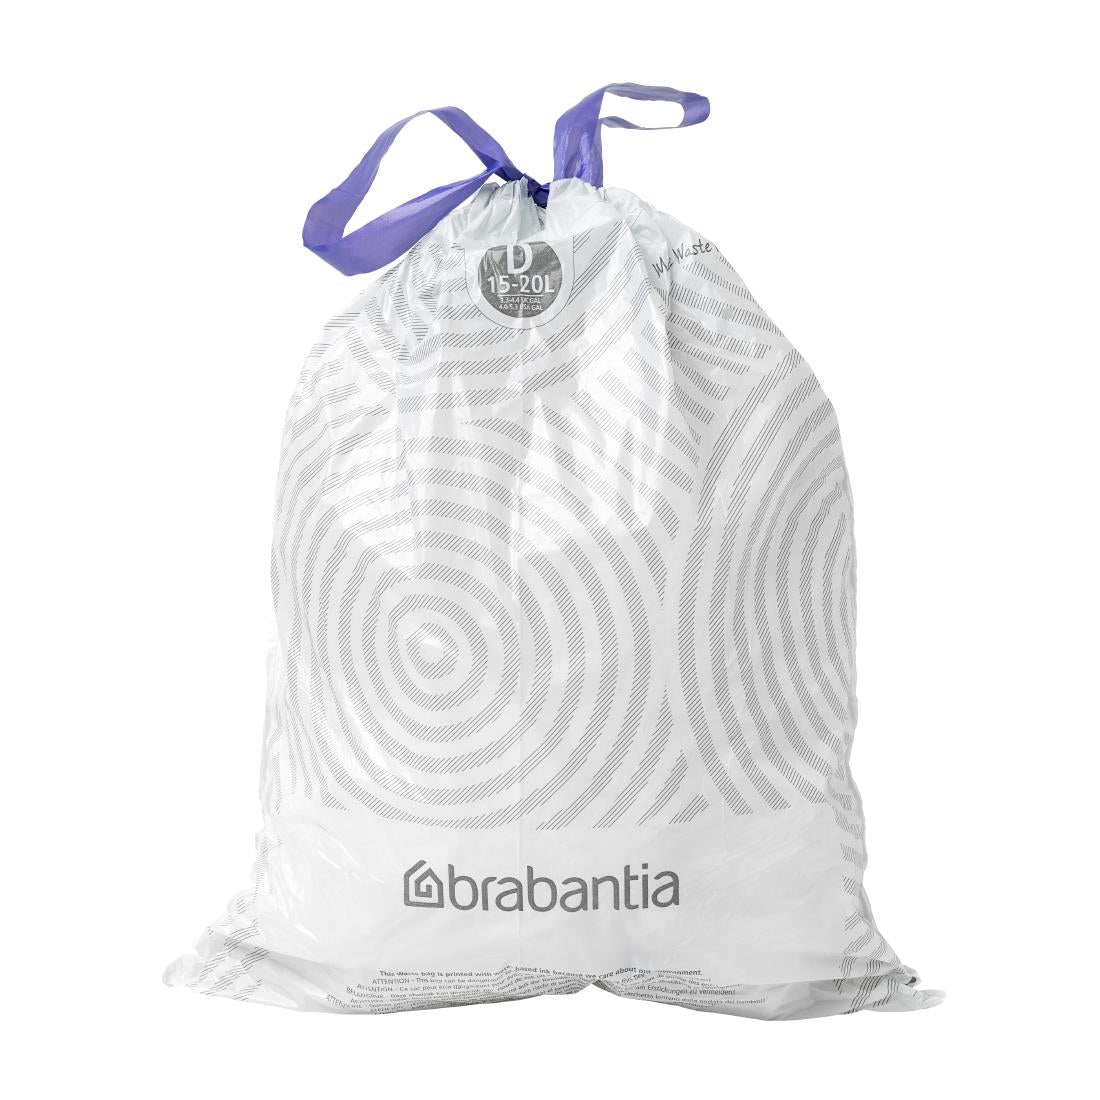 Brabantia PerfectFit Bin Bags D 15-20 Litre (Pack of 40)